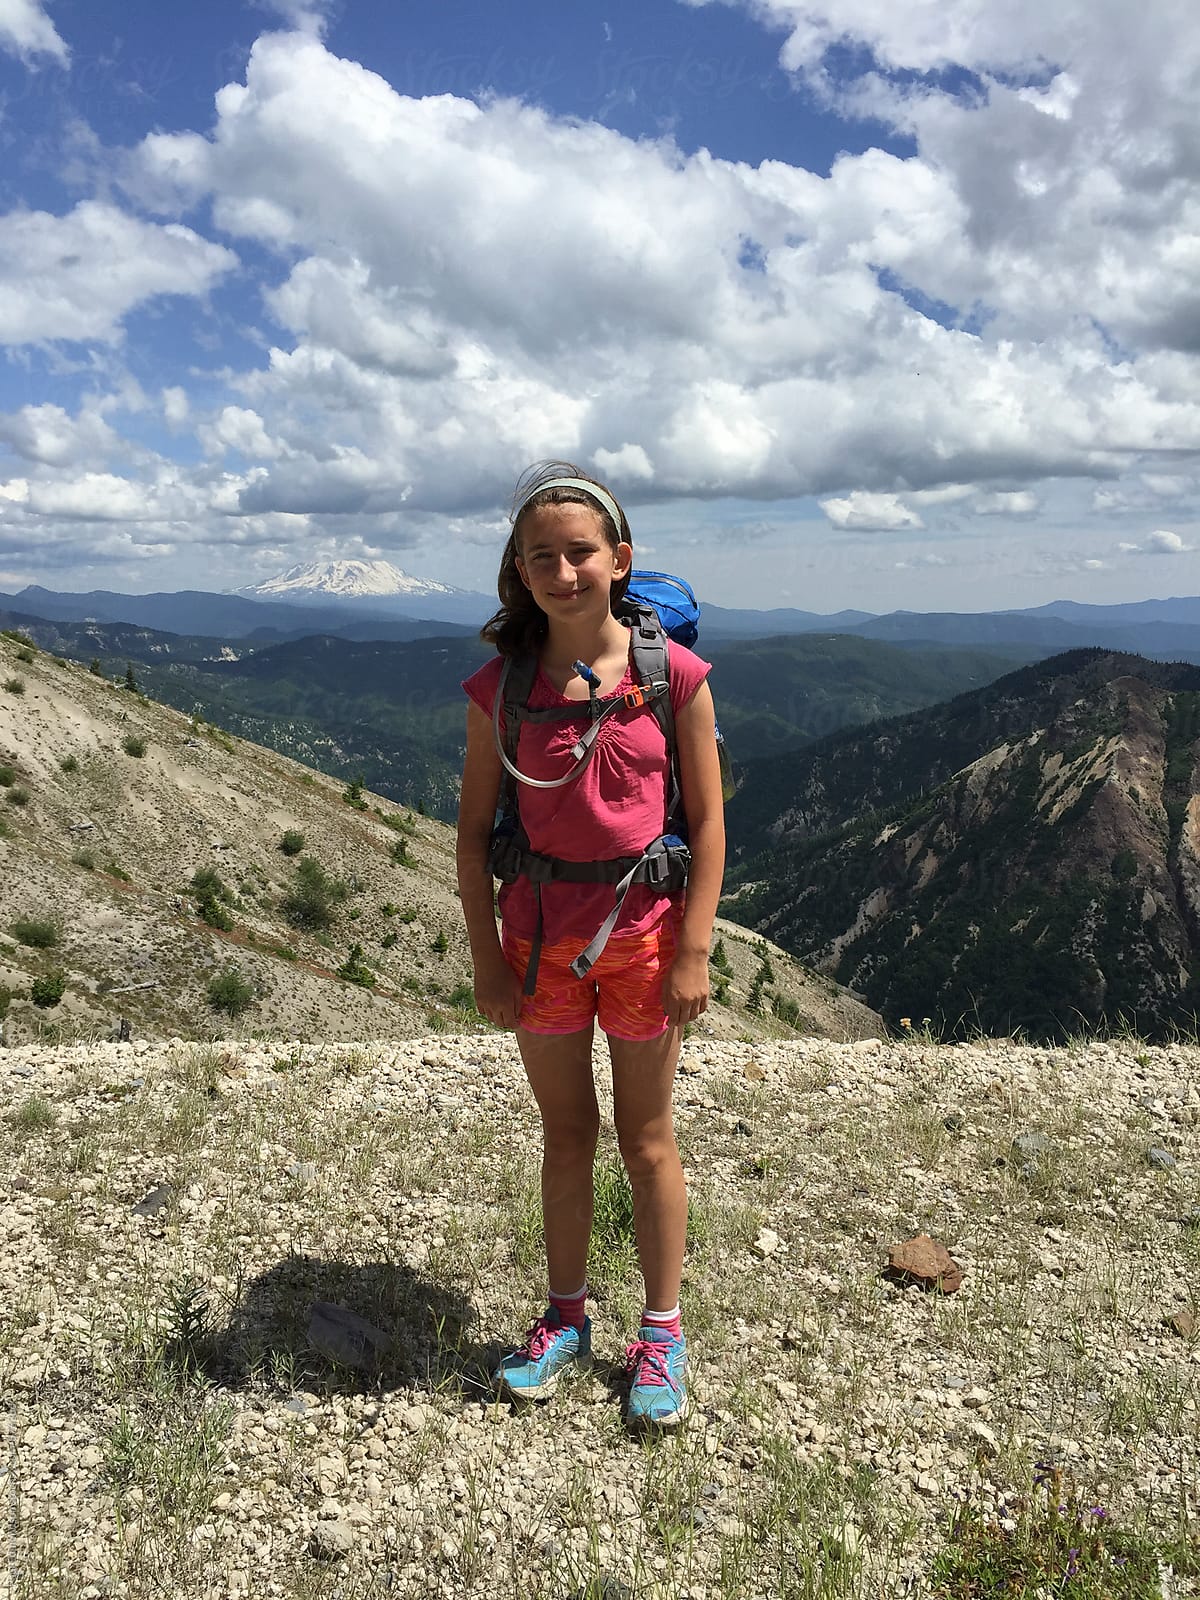 Portrait of adolescent backpacker girl on mountain summit